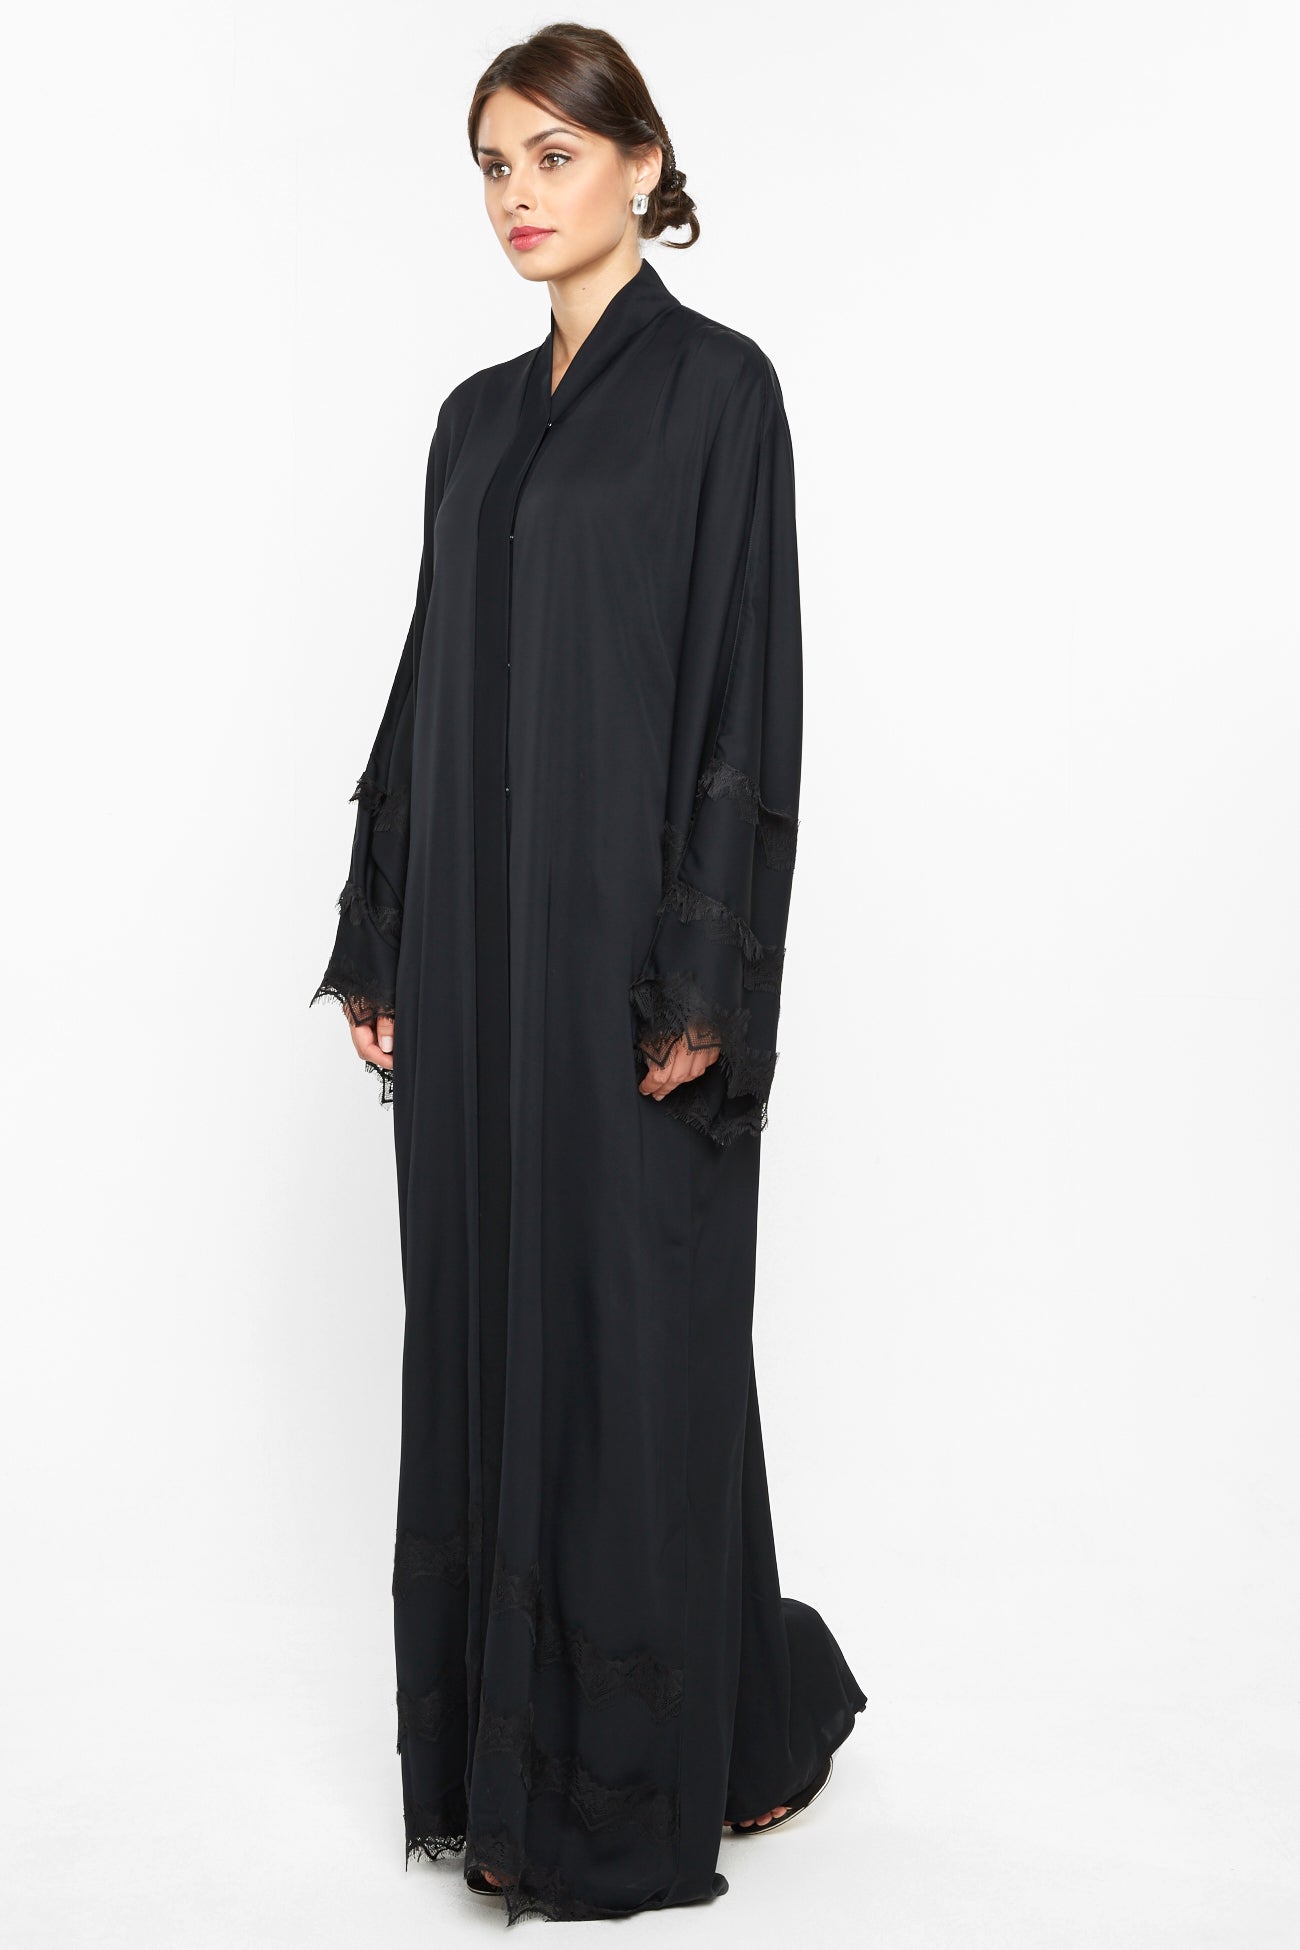 Dubai-made Nukhbaa brand Abaya a reflection of Dubai's luxury fashion scene-AJ543A